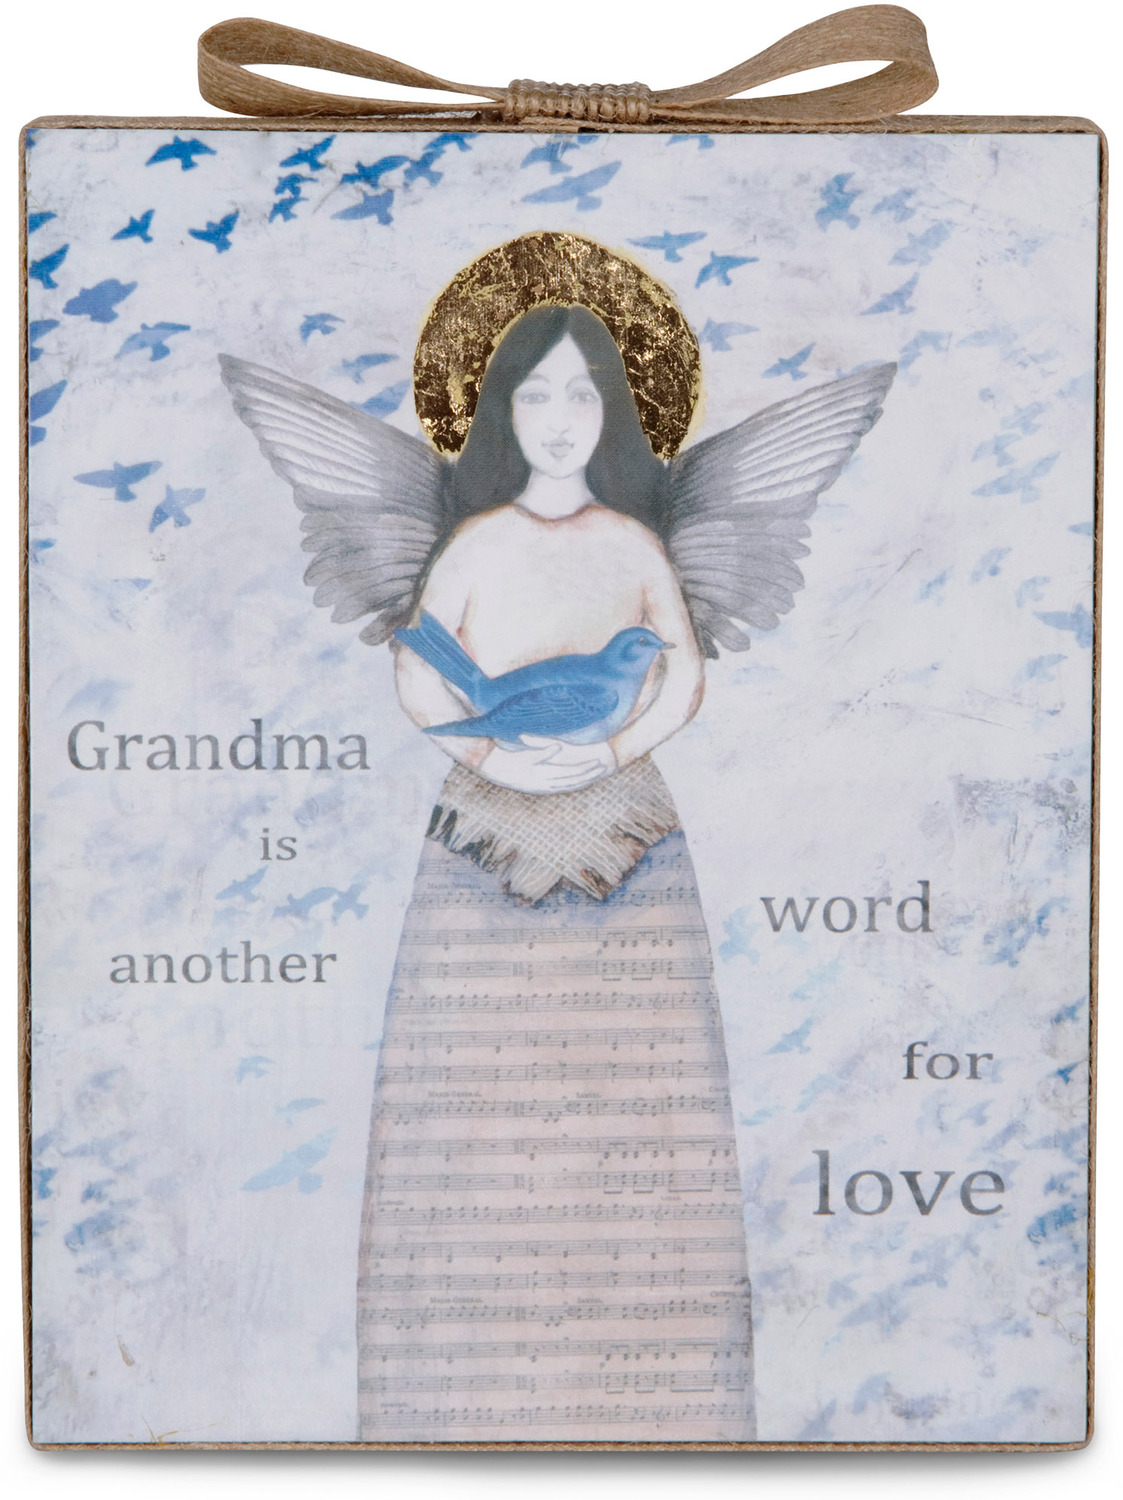 Grandma by Sherry Cook Studio - Grandma - 6.5" x 5.25" Plaque